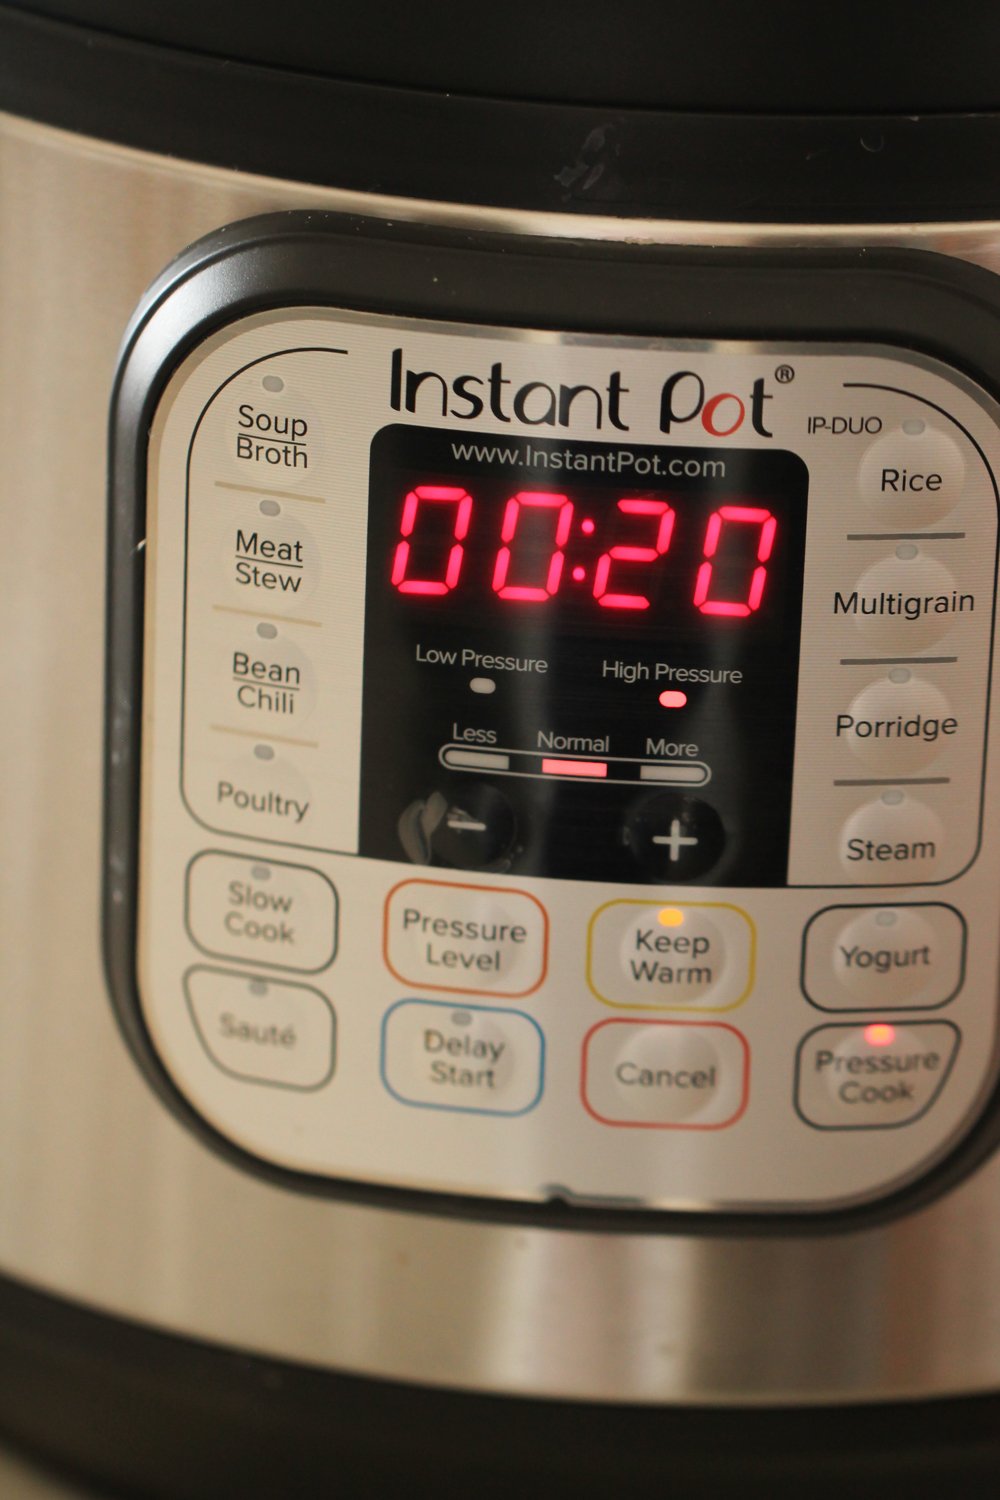 Instant Pot timer set to 20 minutes